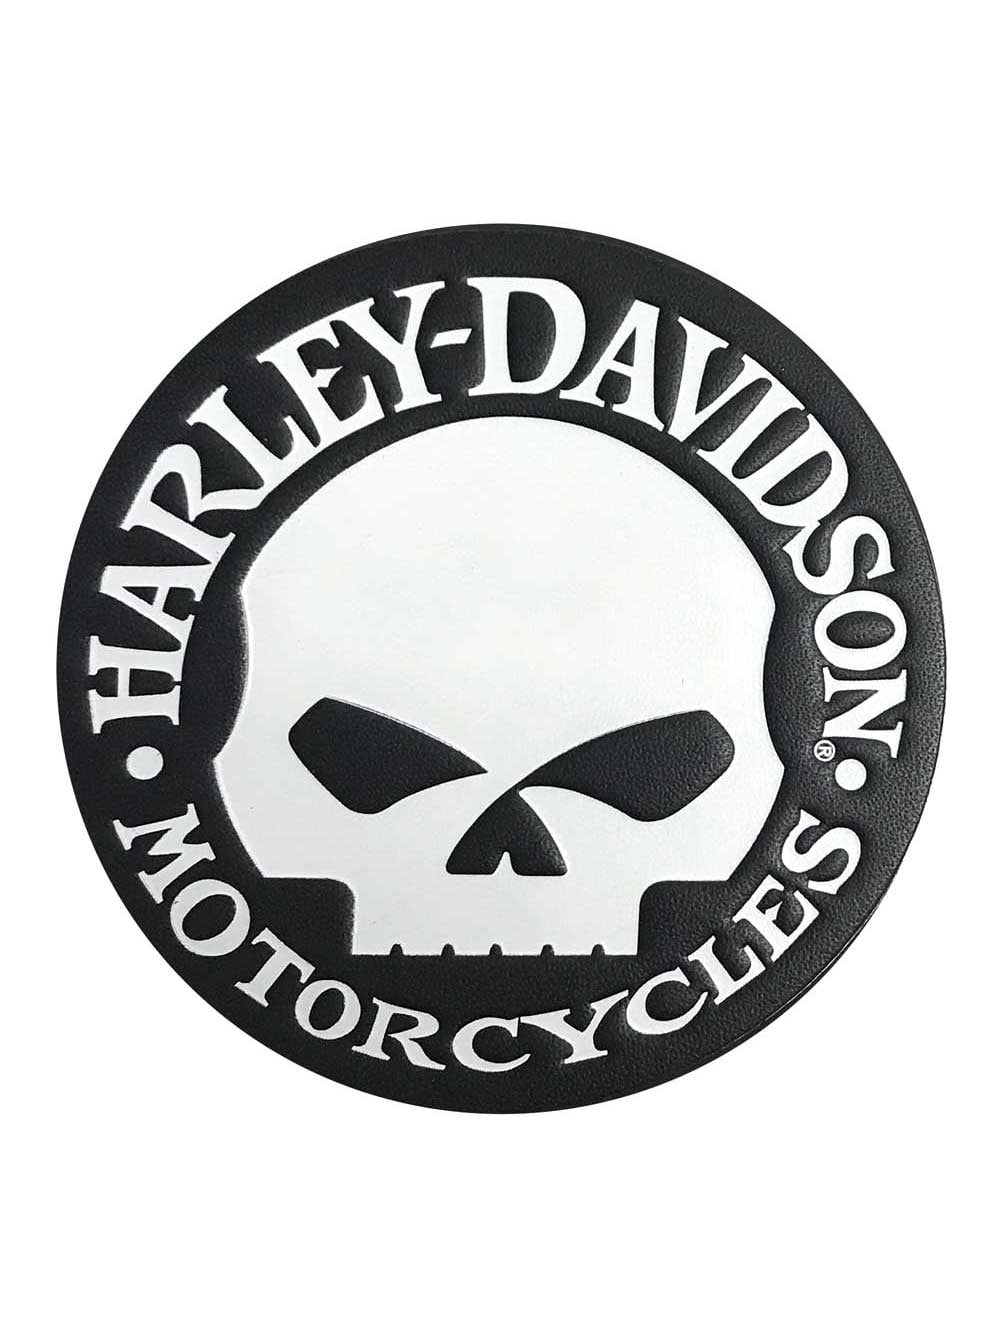 HARLEY DAVIDSON HD AUTO TRUCK MOTORCYCLE WILLIE G SKULL EMBLEM 3D DECAL GENUINE